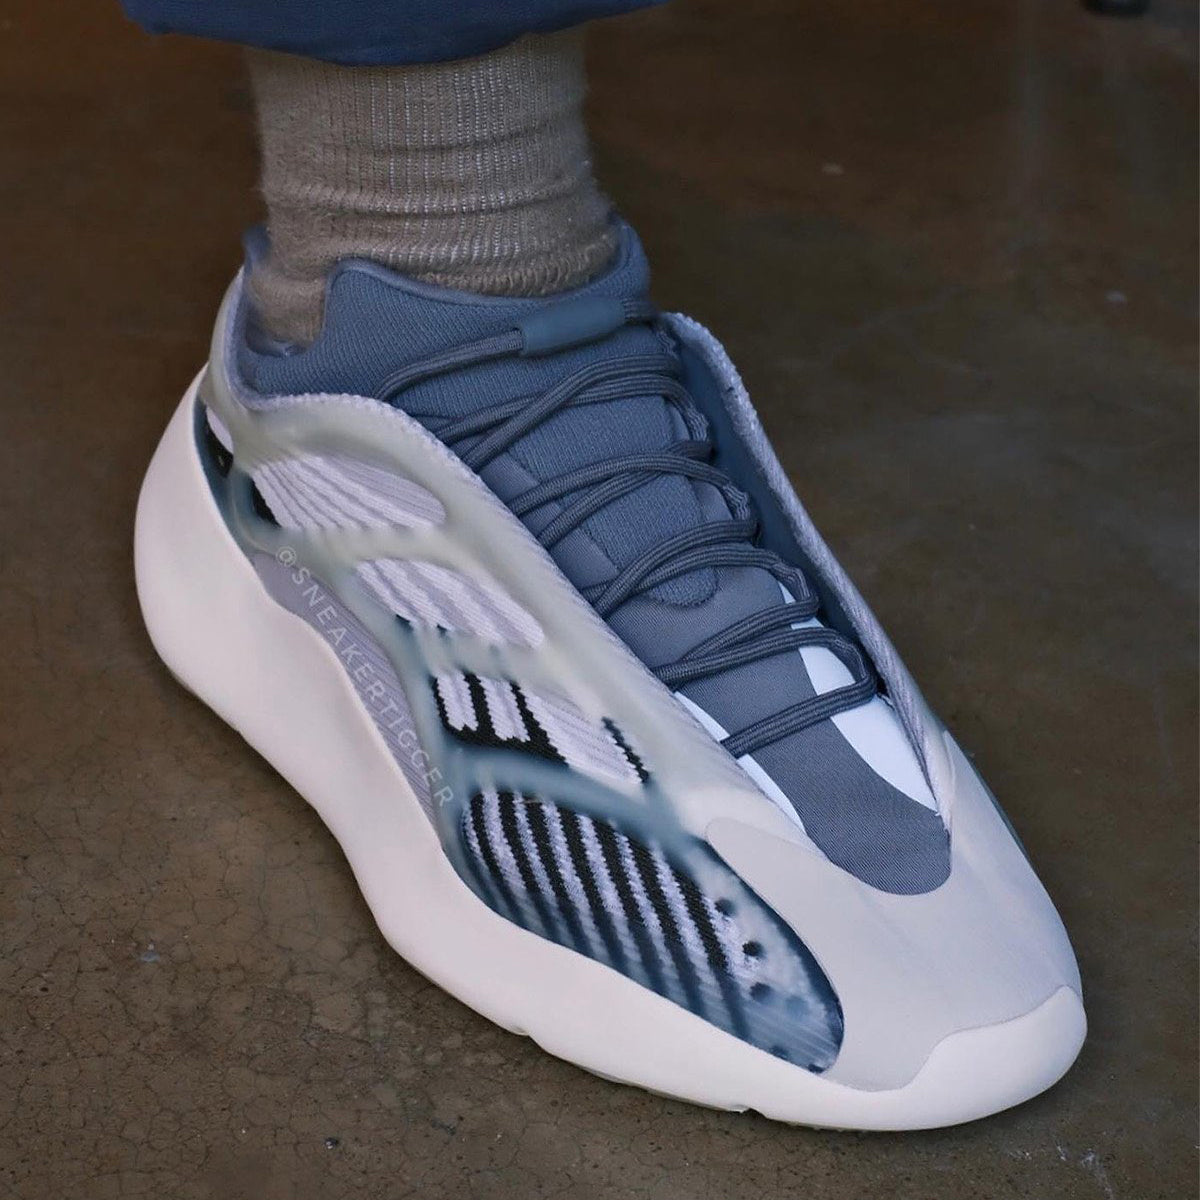 adidas Yeezy 700 V3 Fade Salt Snrakers Shoes